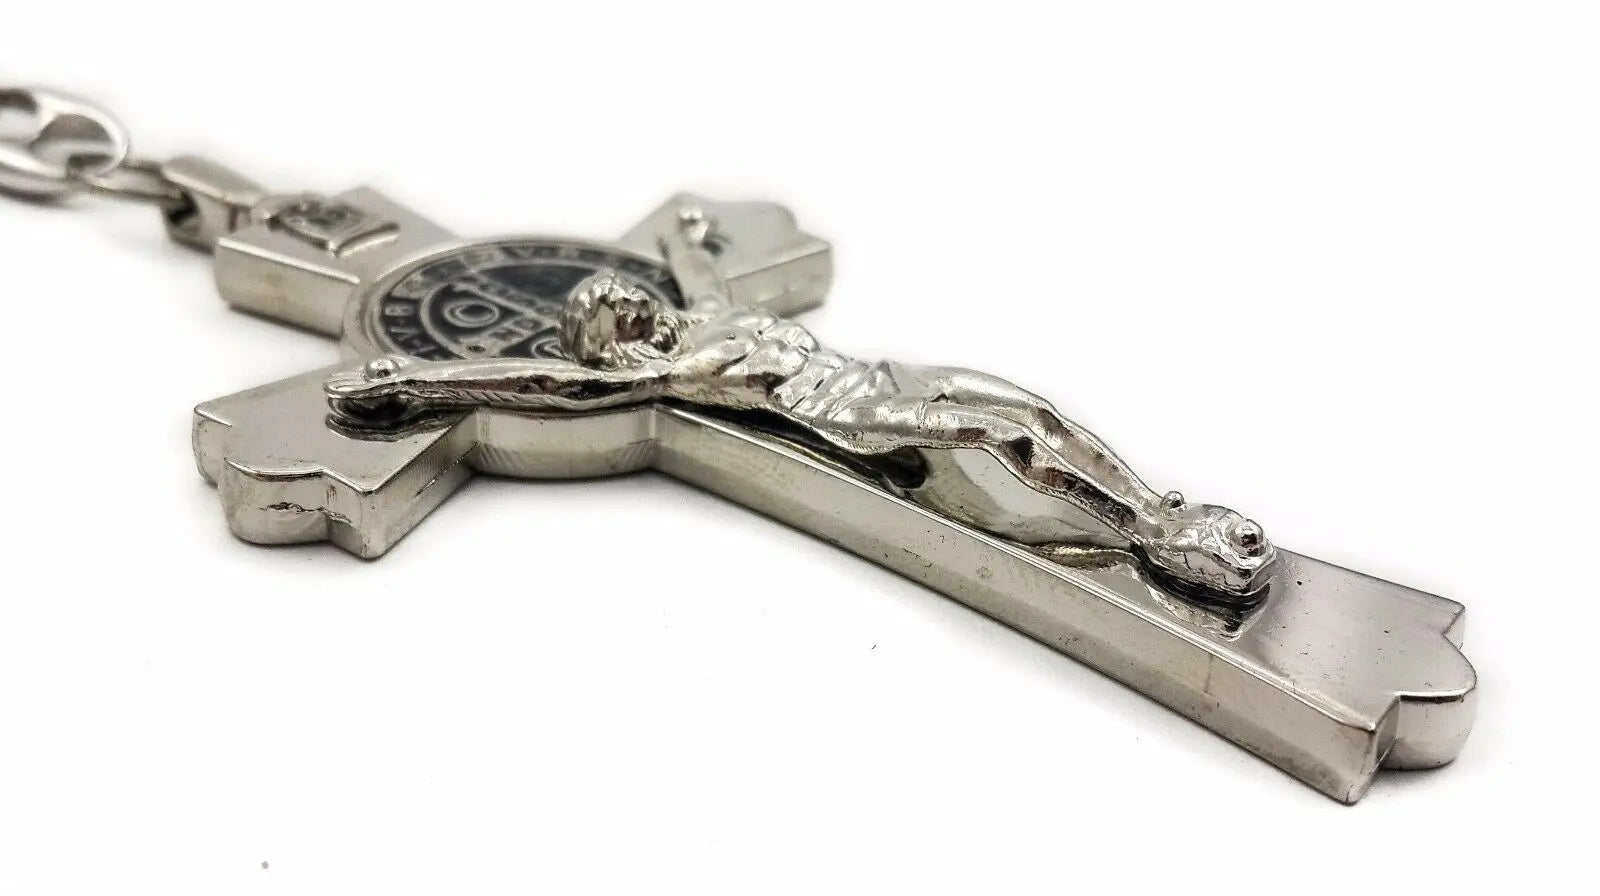 St. Benedict Metal Cross Keychain Catholic Key Ring Holder Jerusalem Charm 3" Nazareth Store